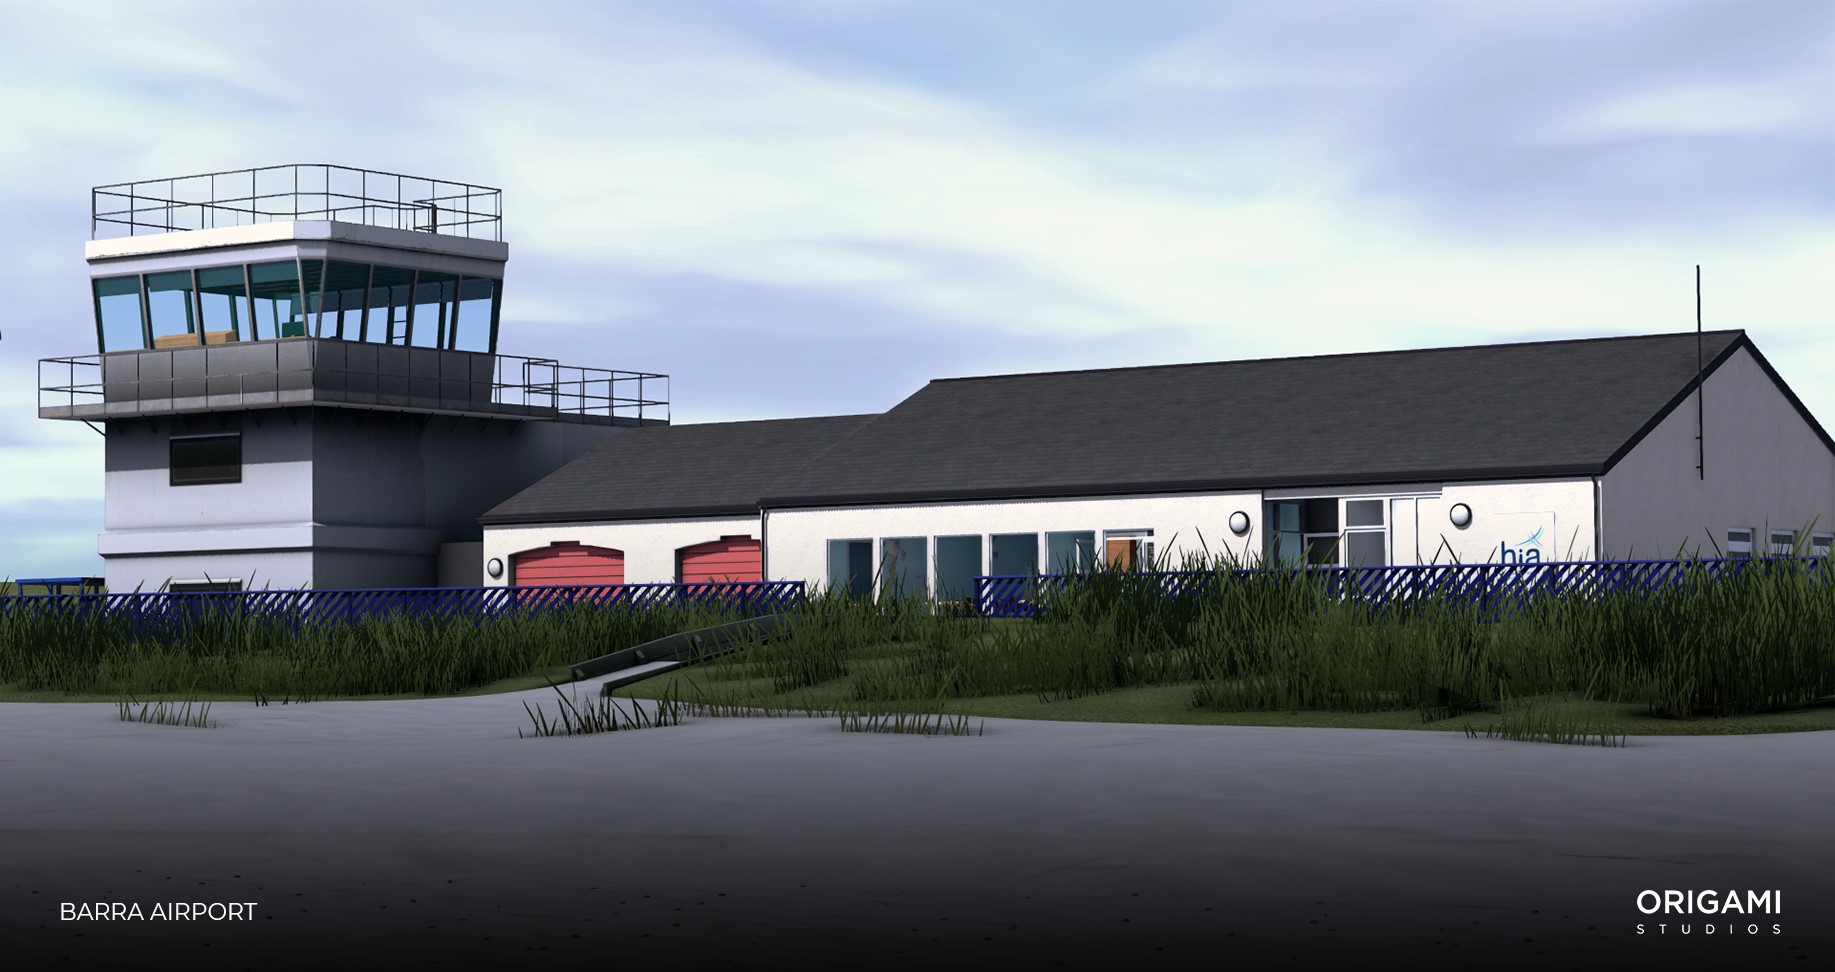 Origami Studios Previews Barra Airport for X-Plane 11 - Origami Studios